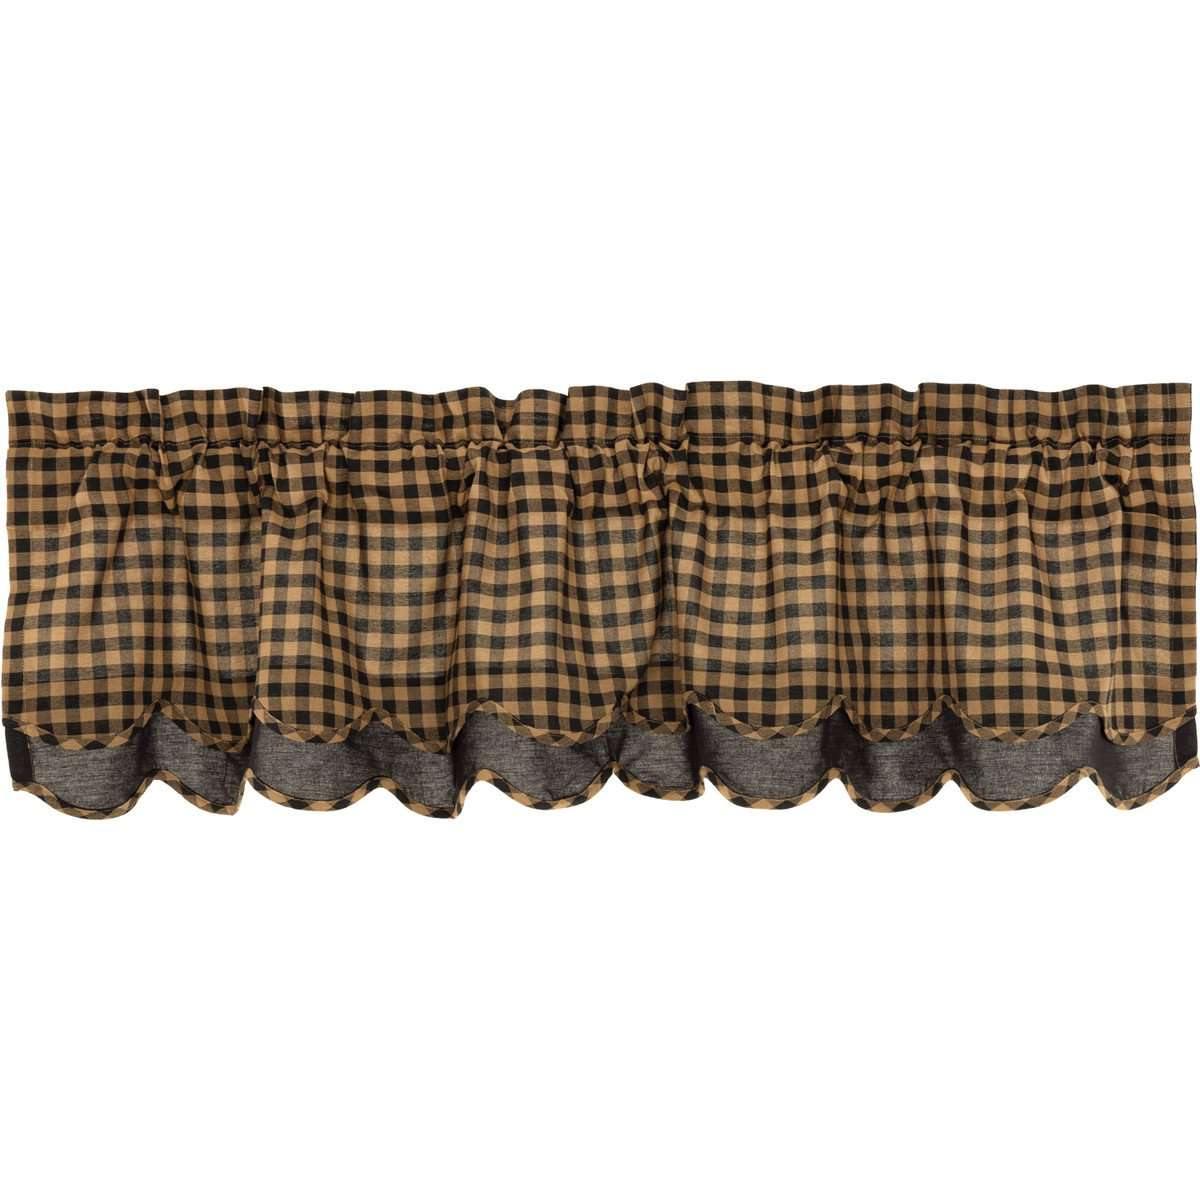 Black Check Scalloped Layered Valance Curtain 16x60 VHC Brands - The Fox Decor